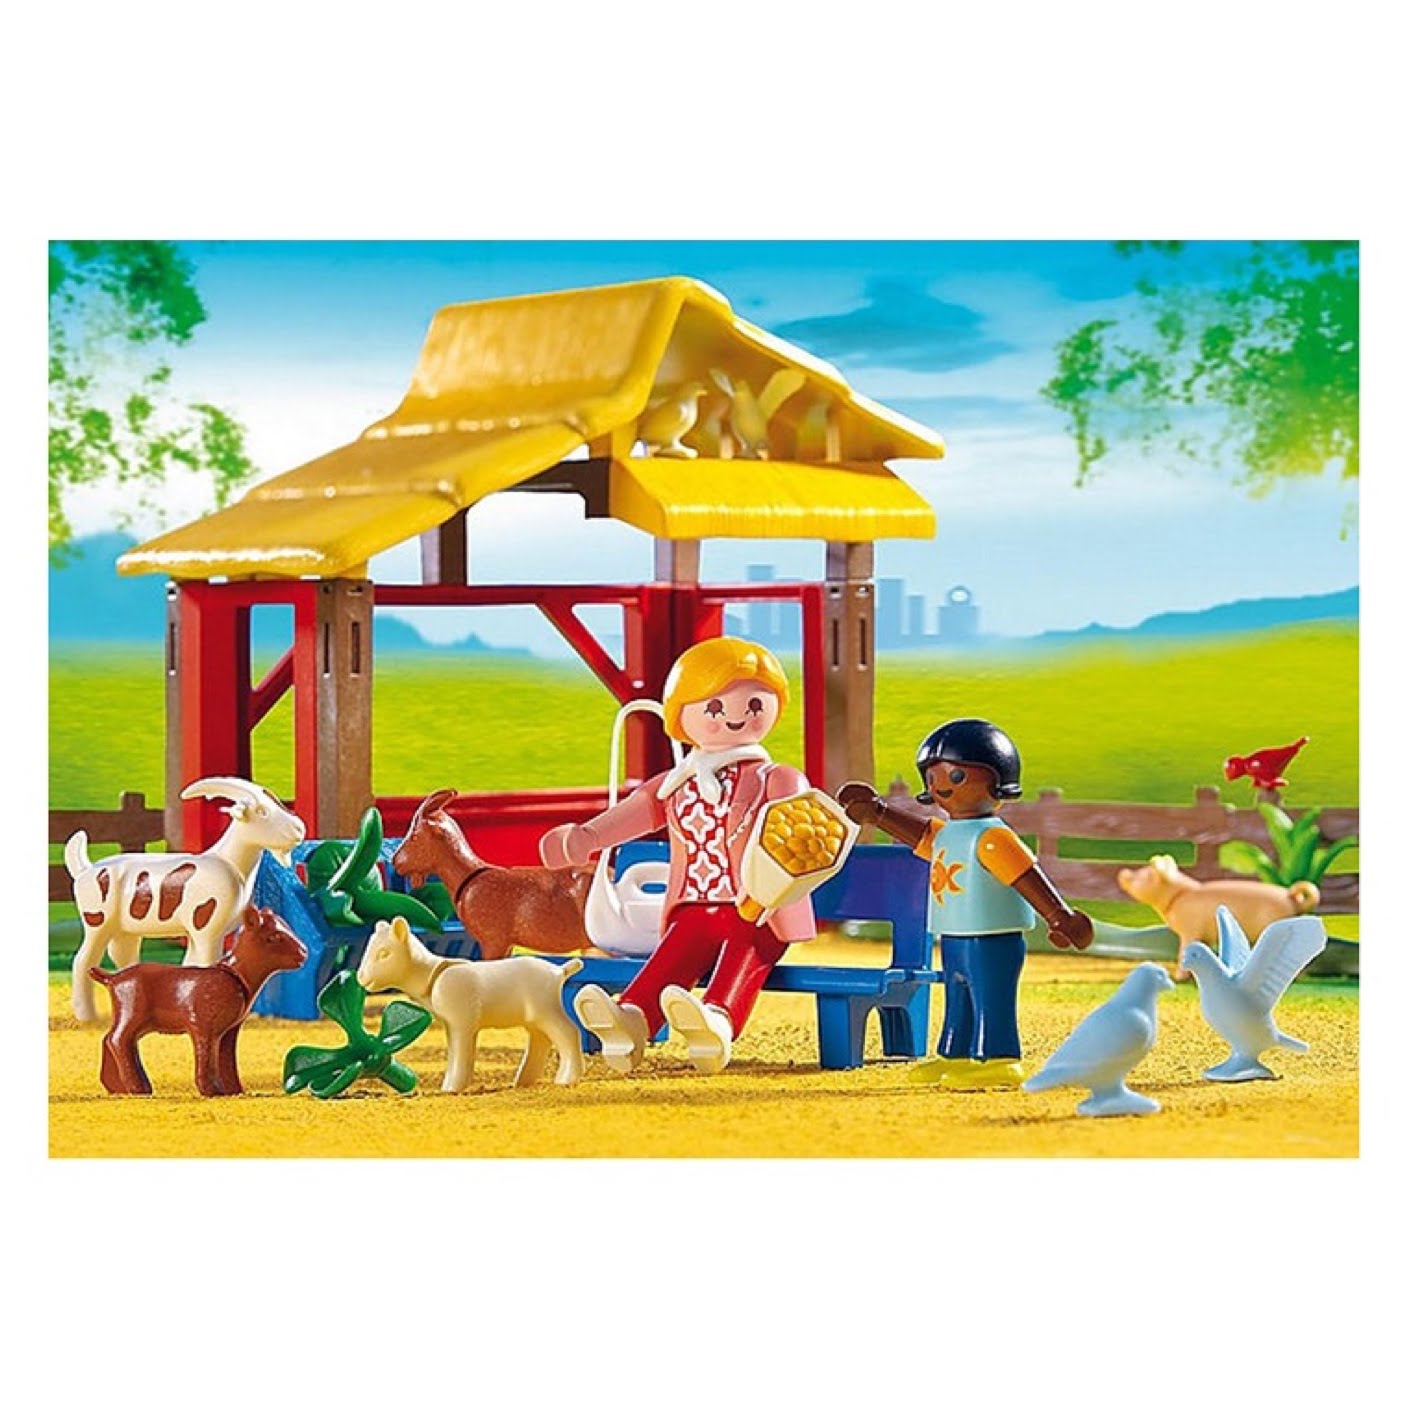 Playmobil 4851 - Farm with animals